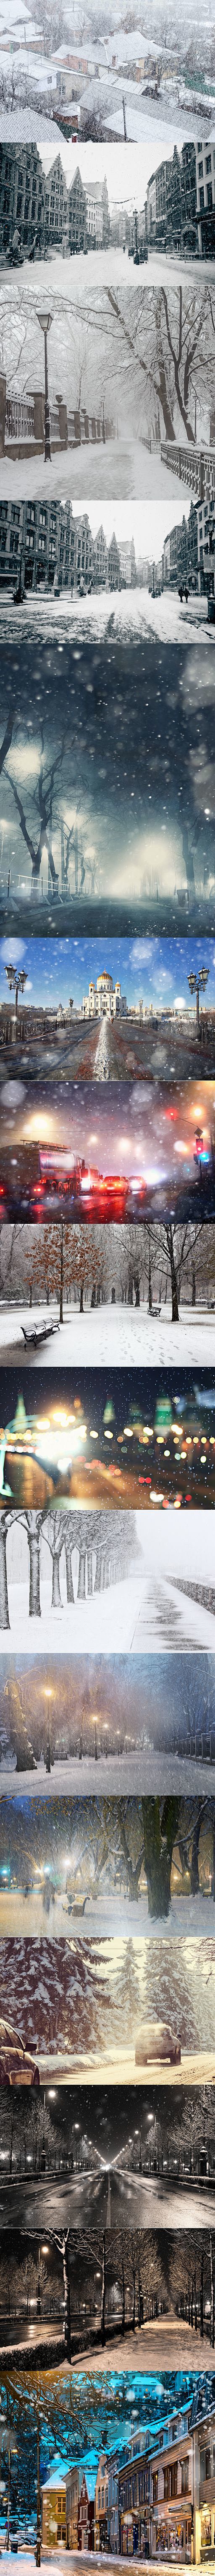 72欧洲城市小镇雪景下雪暴风雪街道积雪林...